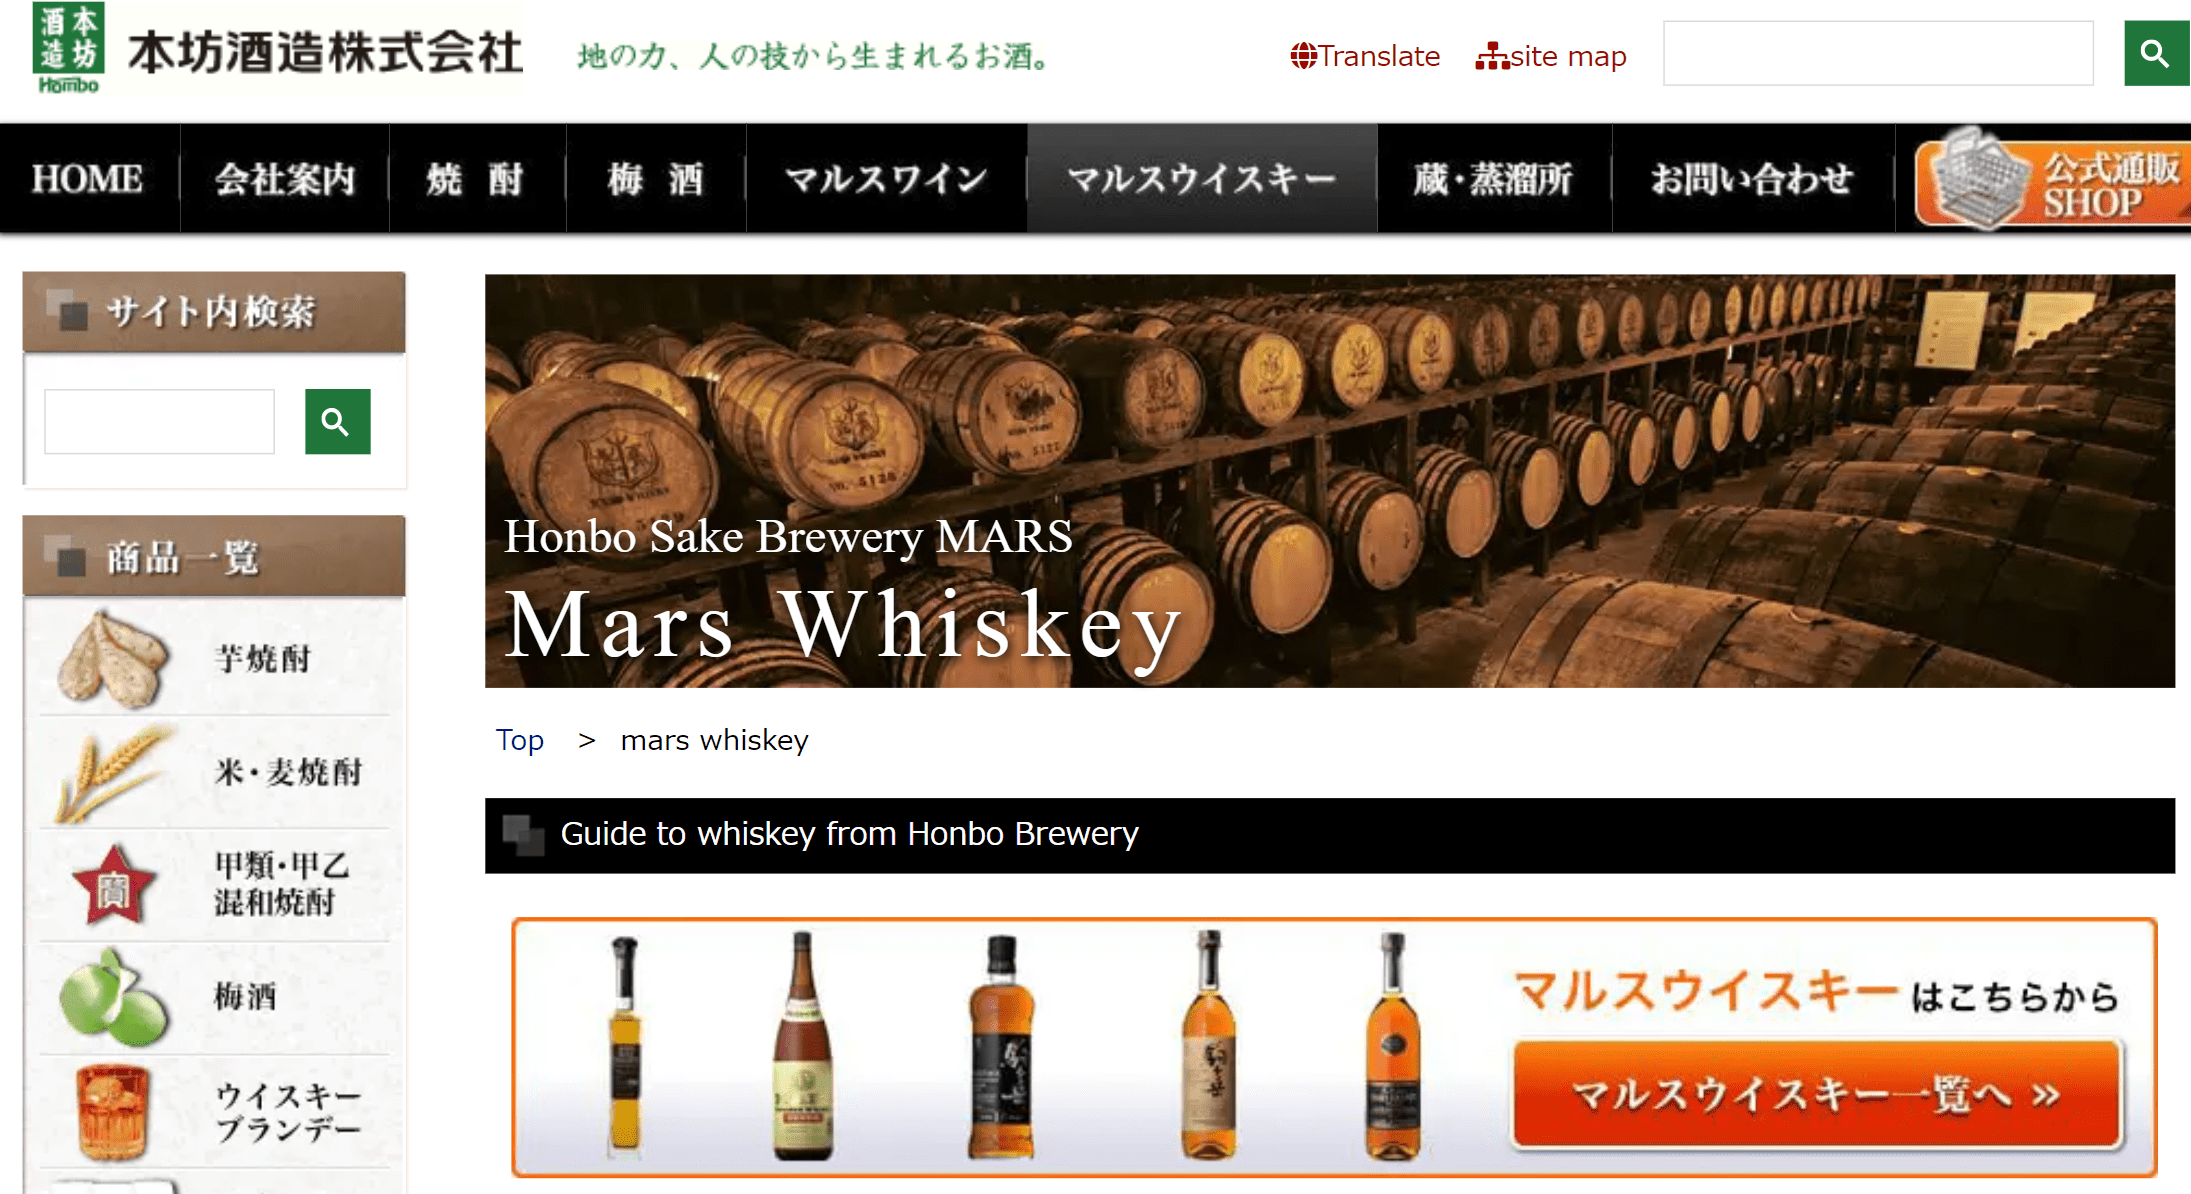 Mars Whisky